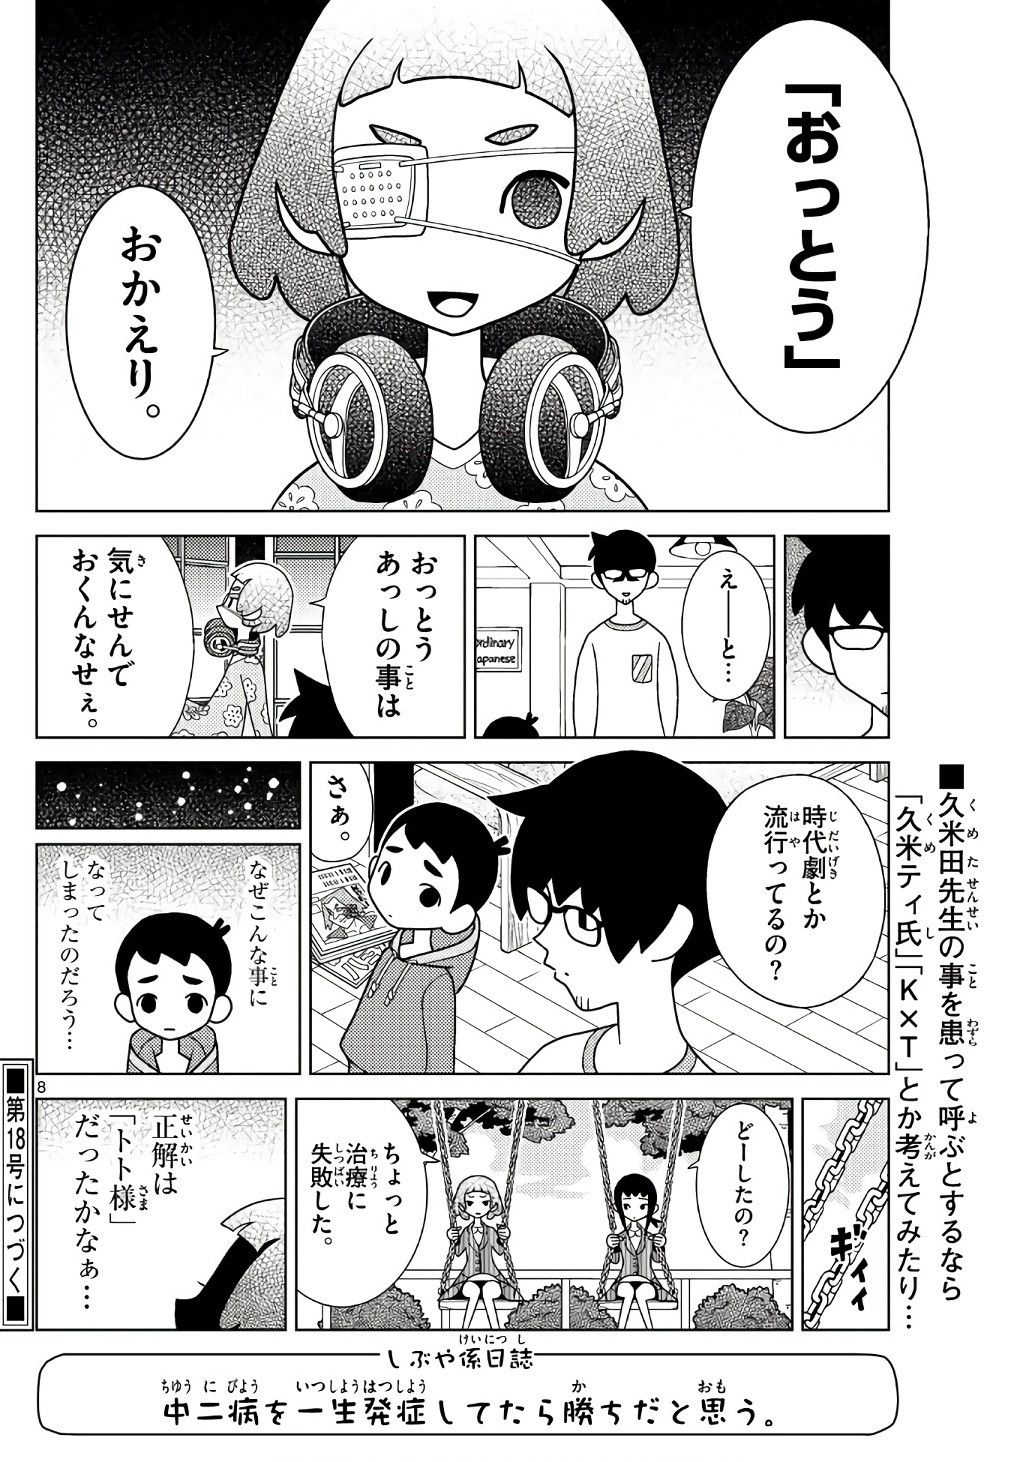 Shibuya Near Family - Chapter 089 - Page 8